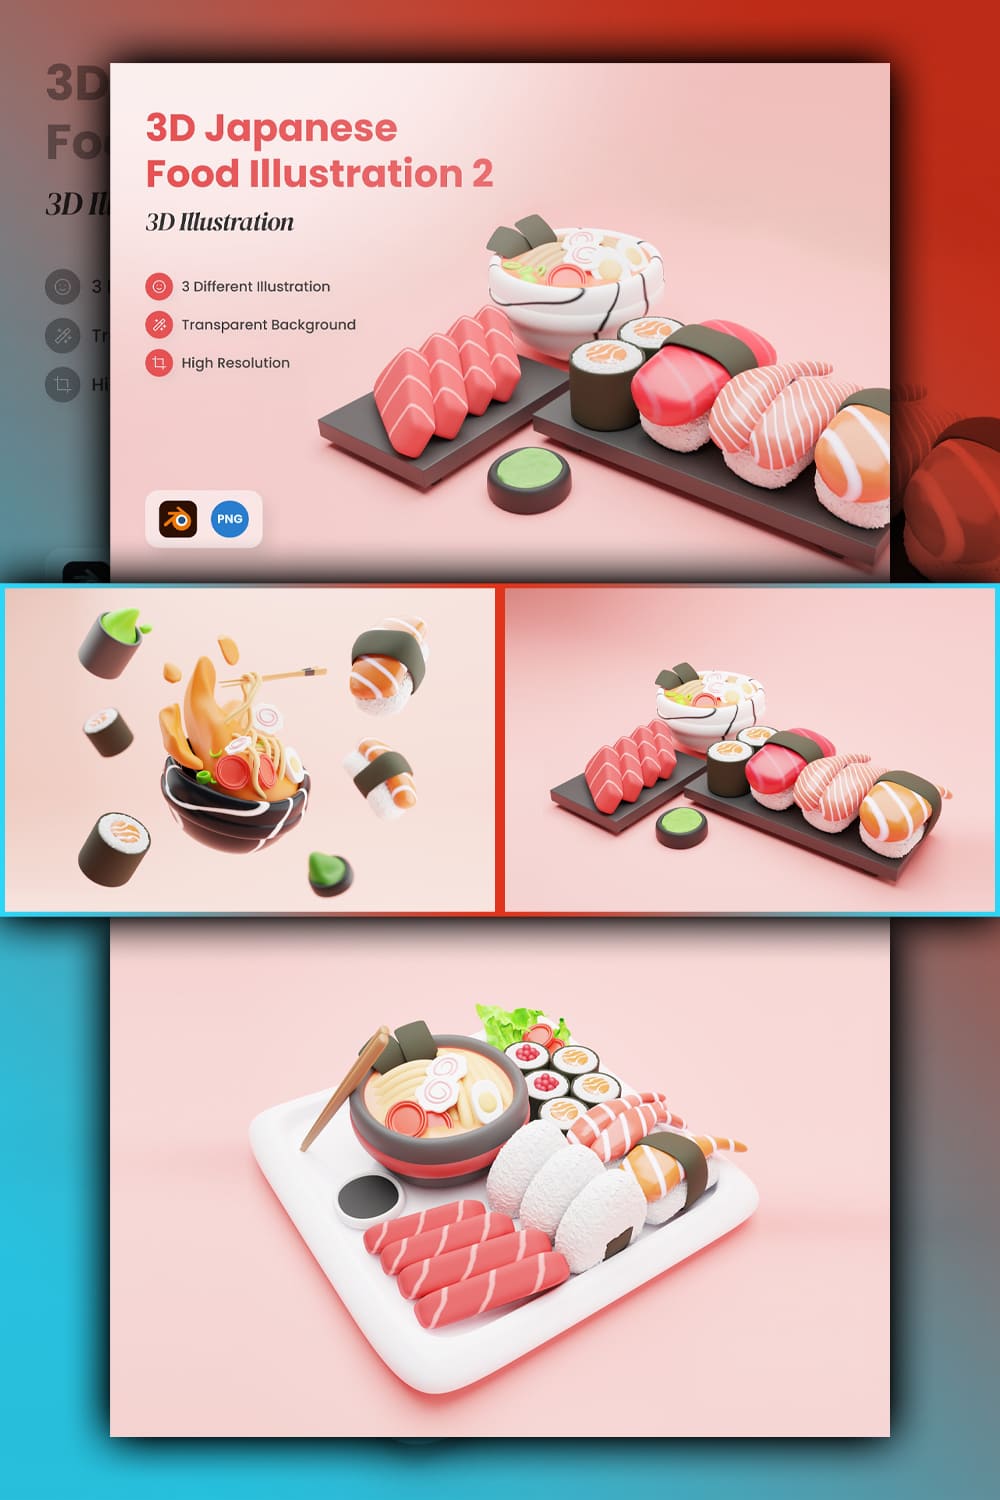 3D Japanese Food illustration 2 pinterest image preview.